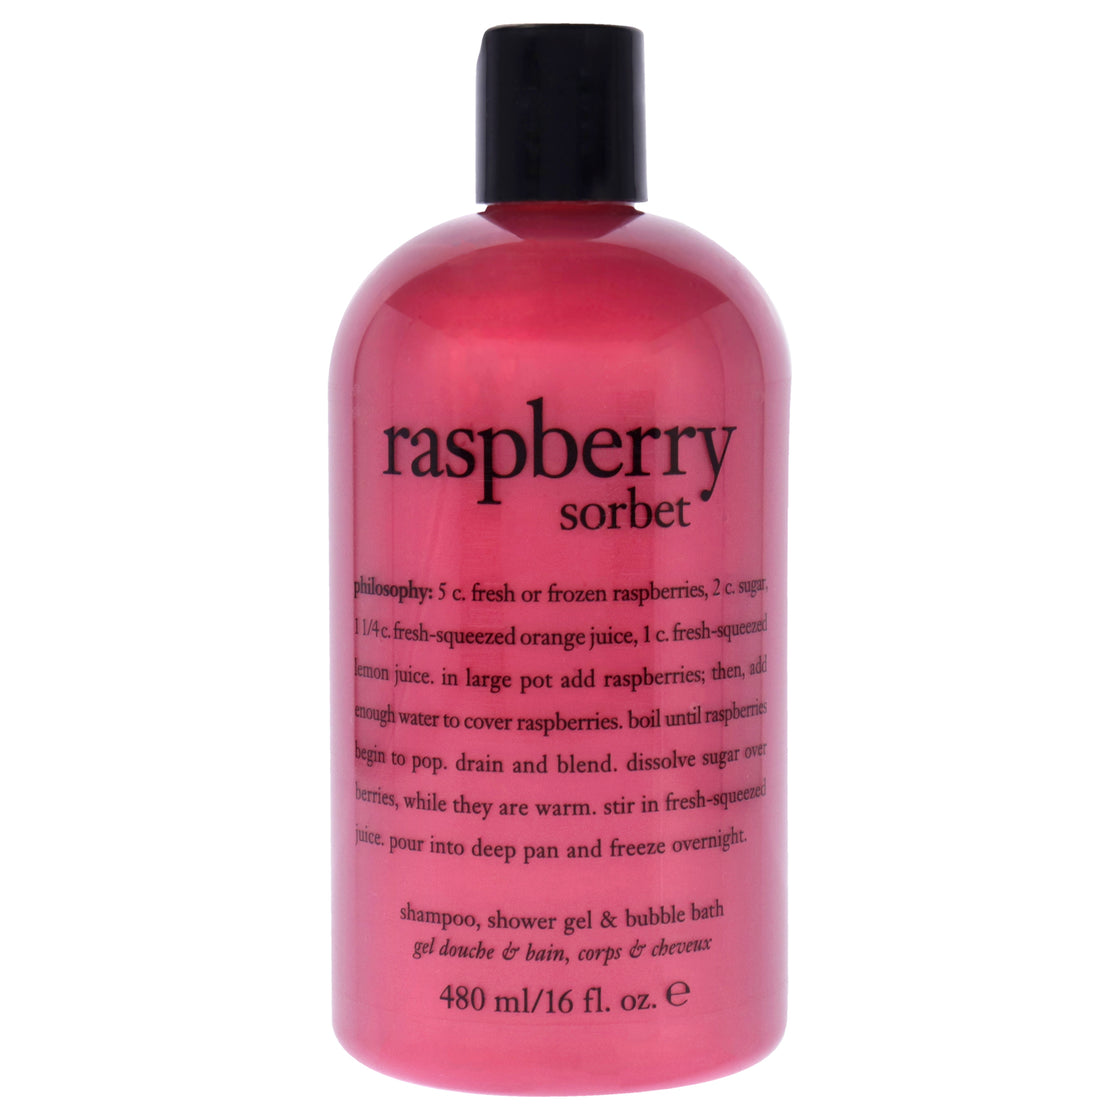 Raspberry Sorbet Shampoo Bath and Shower Gel by Philosophy for Unisex - 16 oz Shower Gel